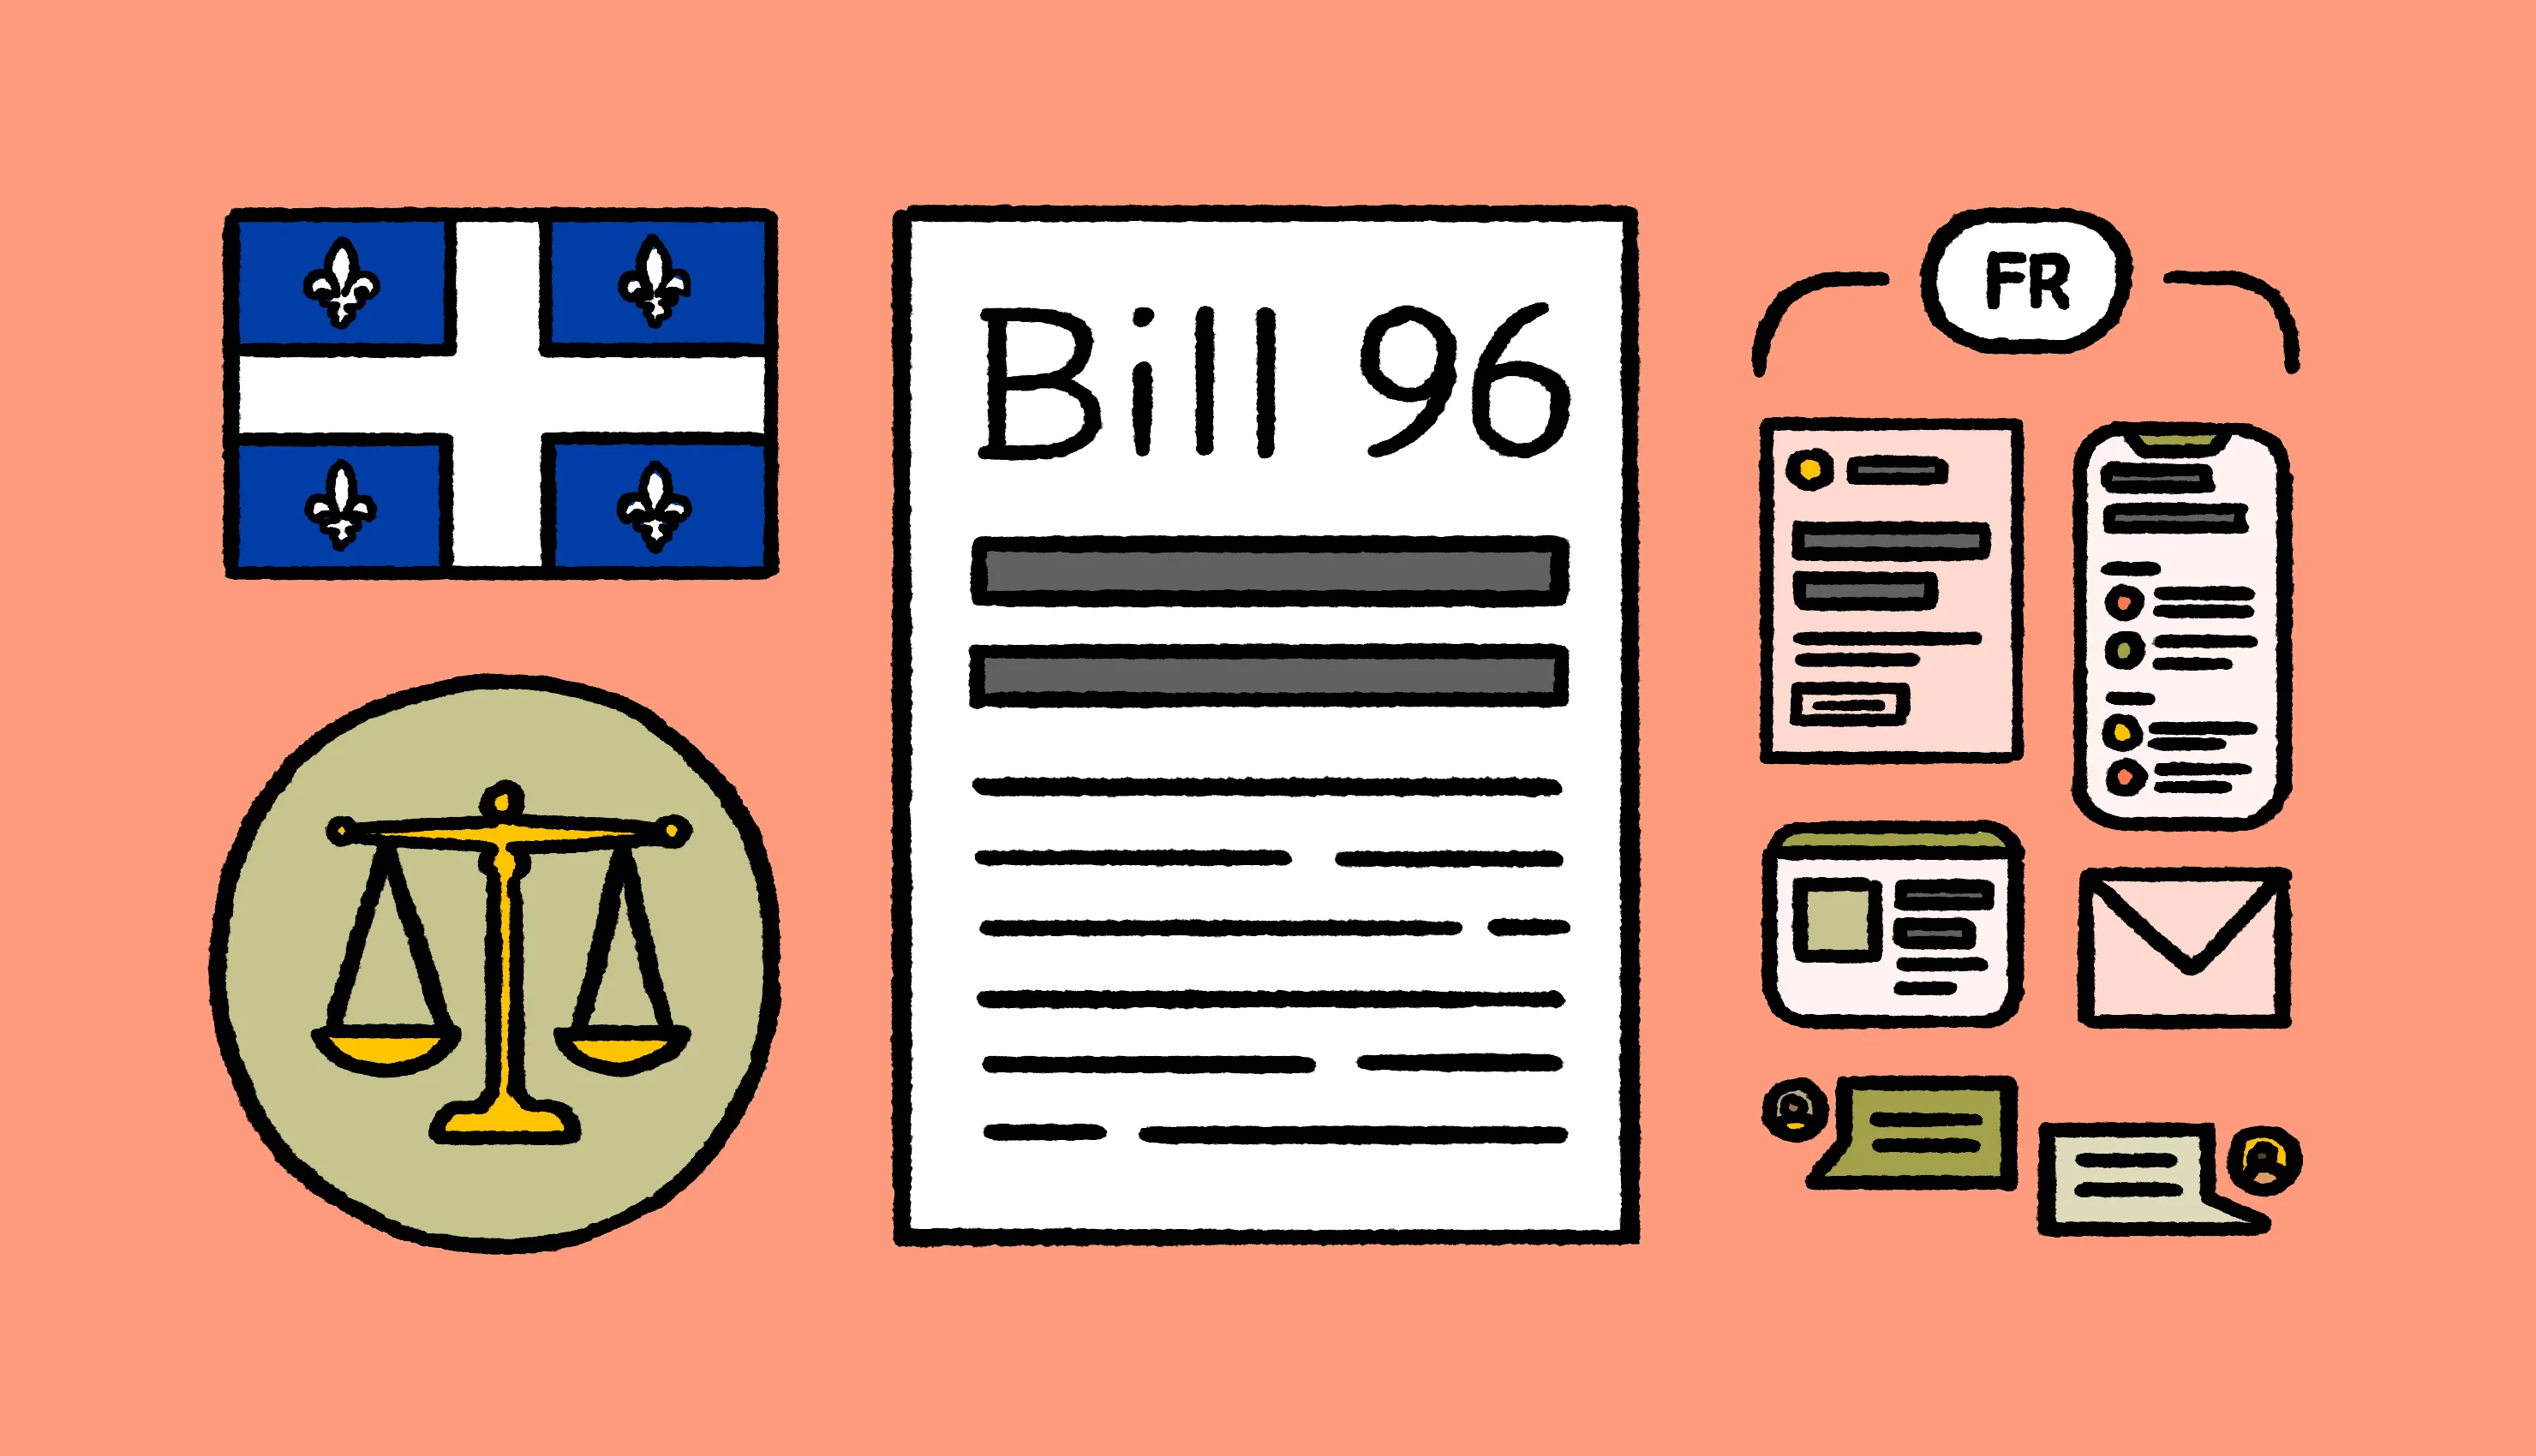 Visual representation of Bill 96